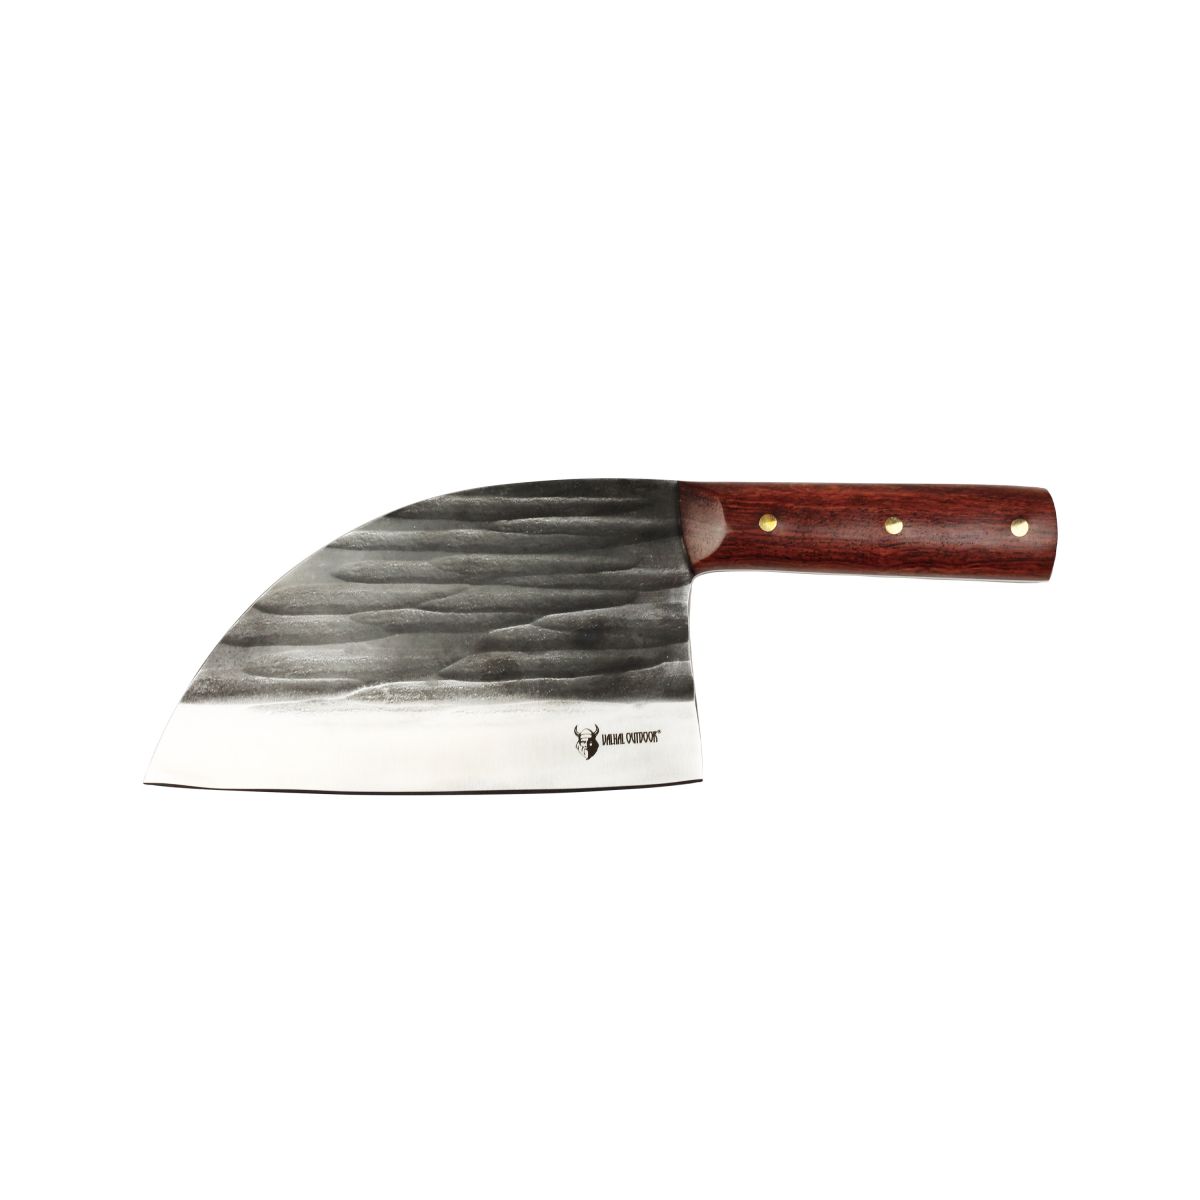 vhknife1 butchers knife 18cm blade